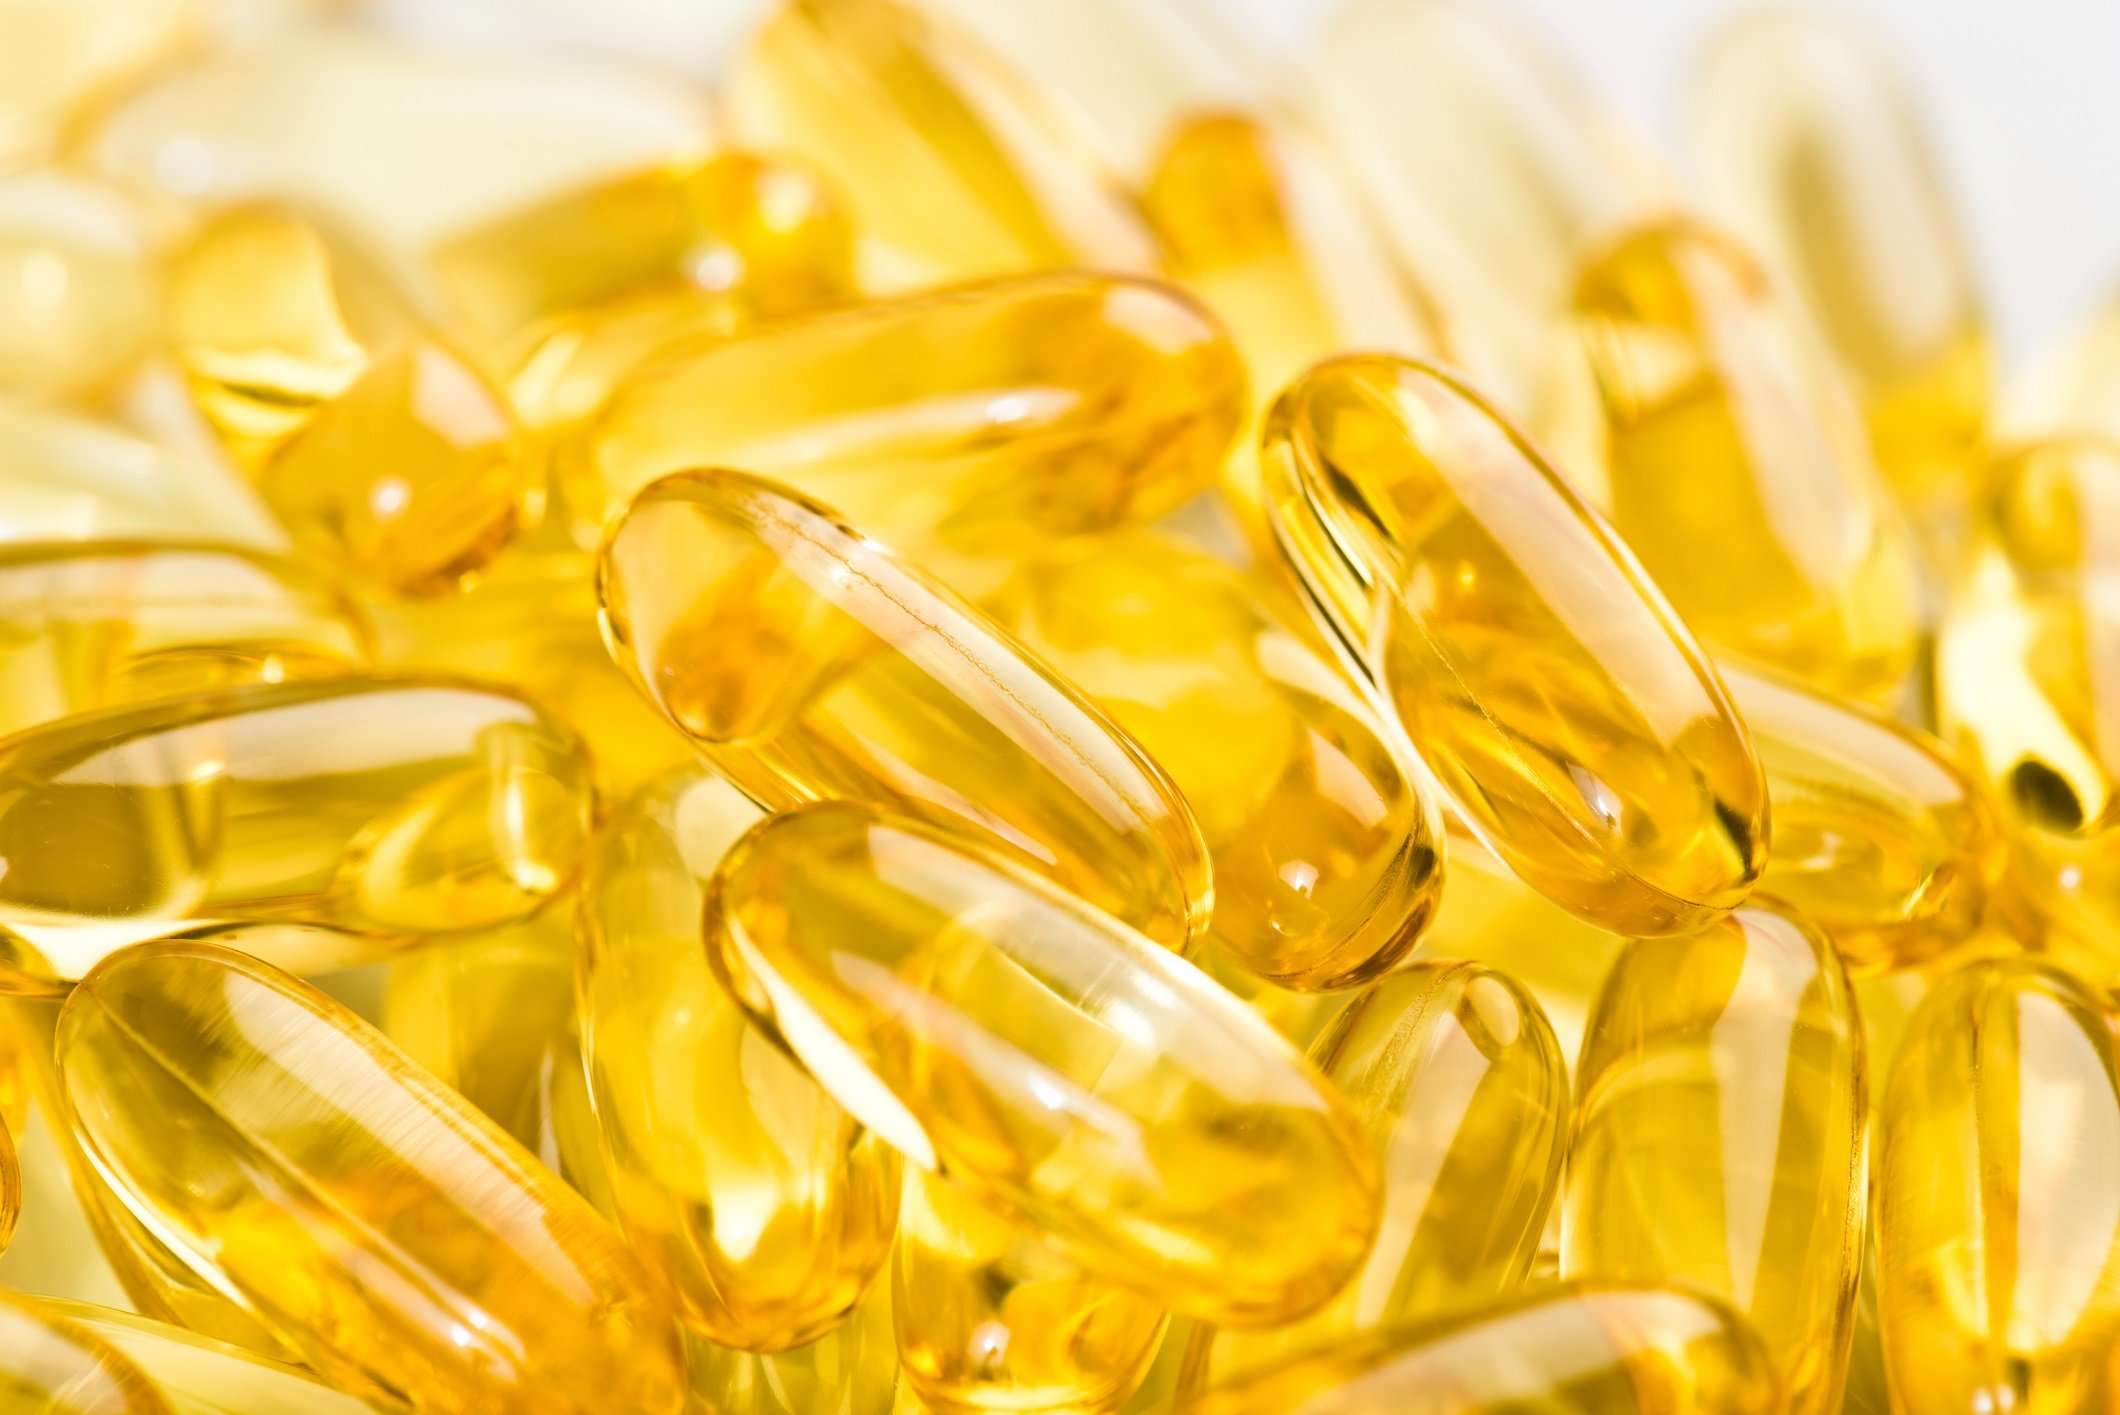 Fish oil supplements do not raise LDL